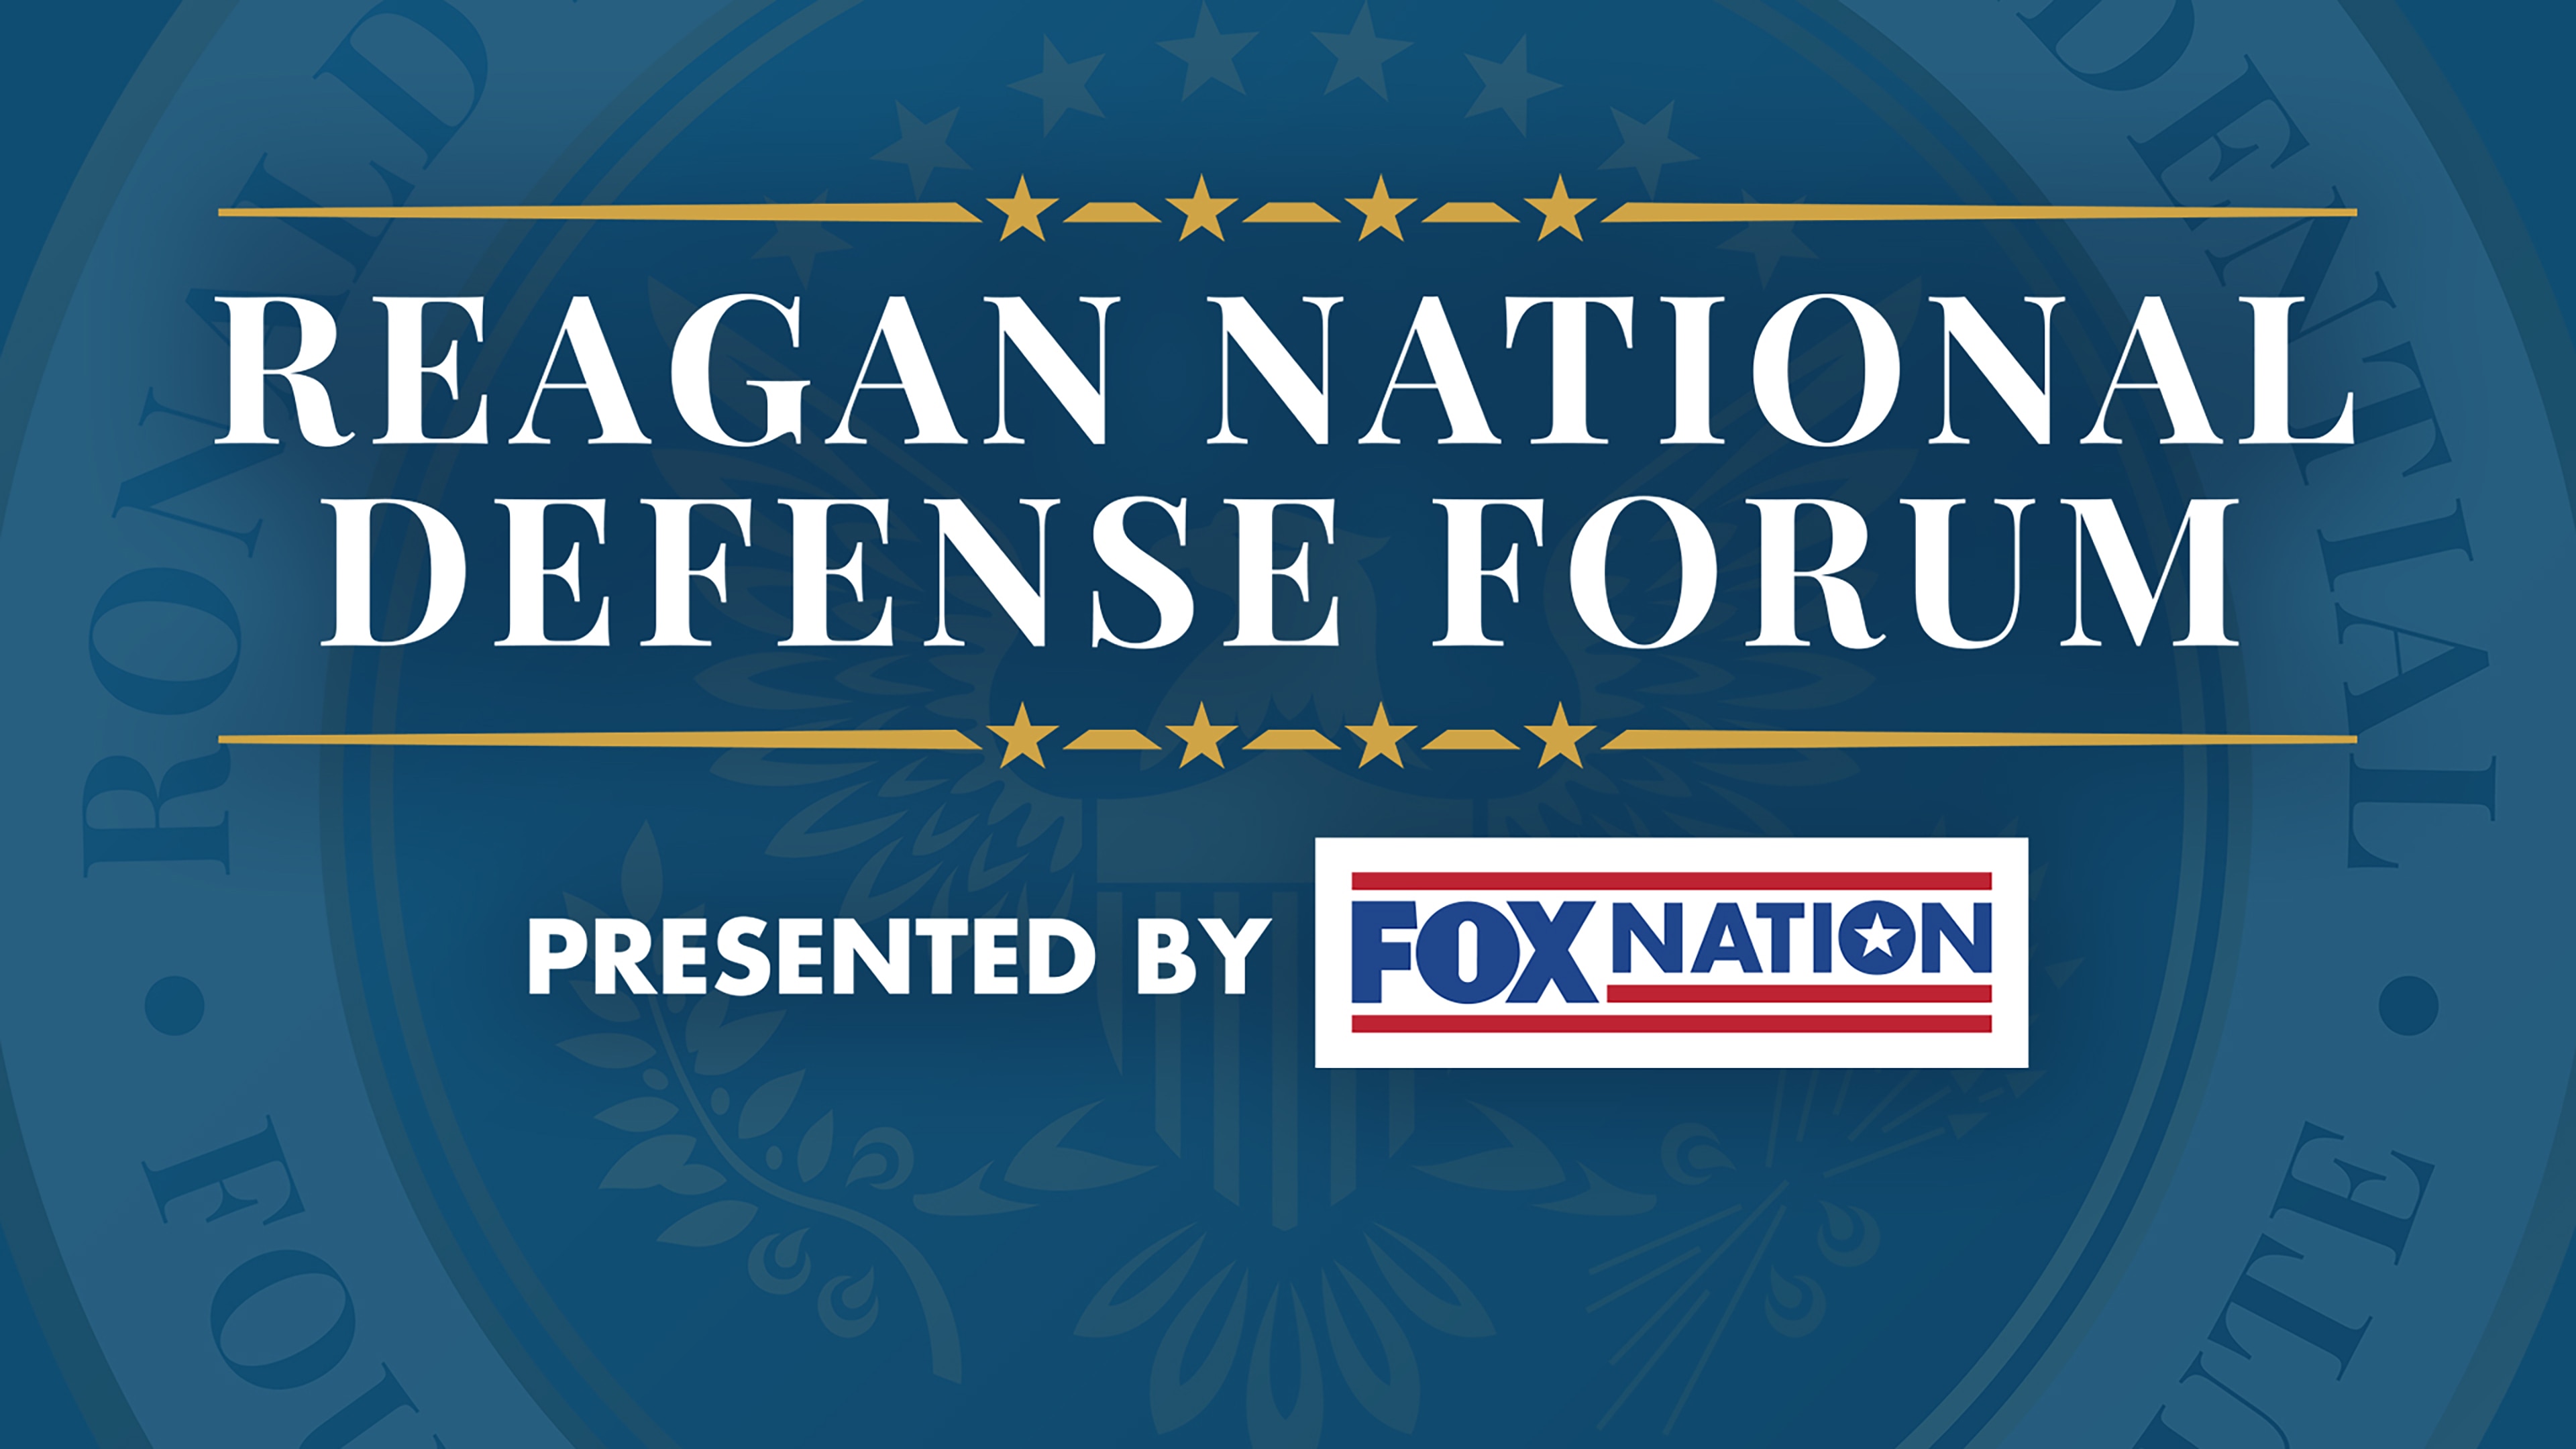 Reagan National Defense Forum Panel Season 1, Episode 1, "Panel 1